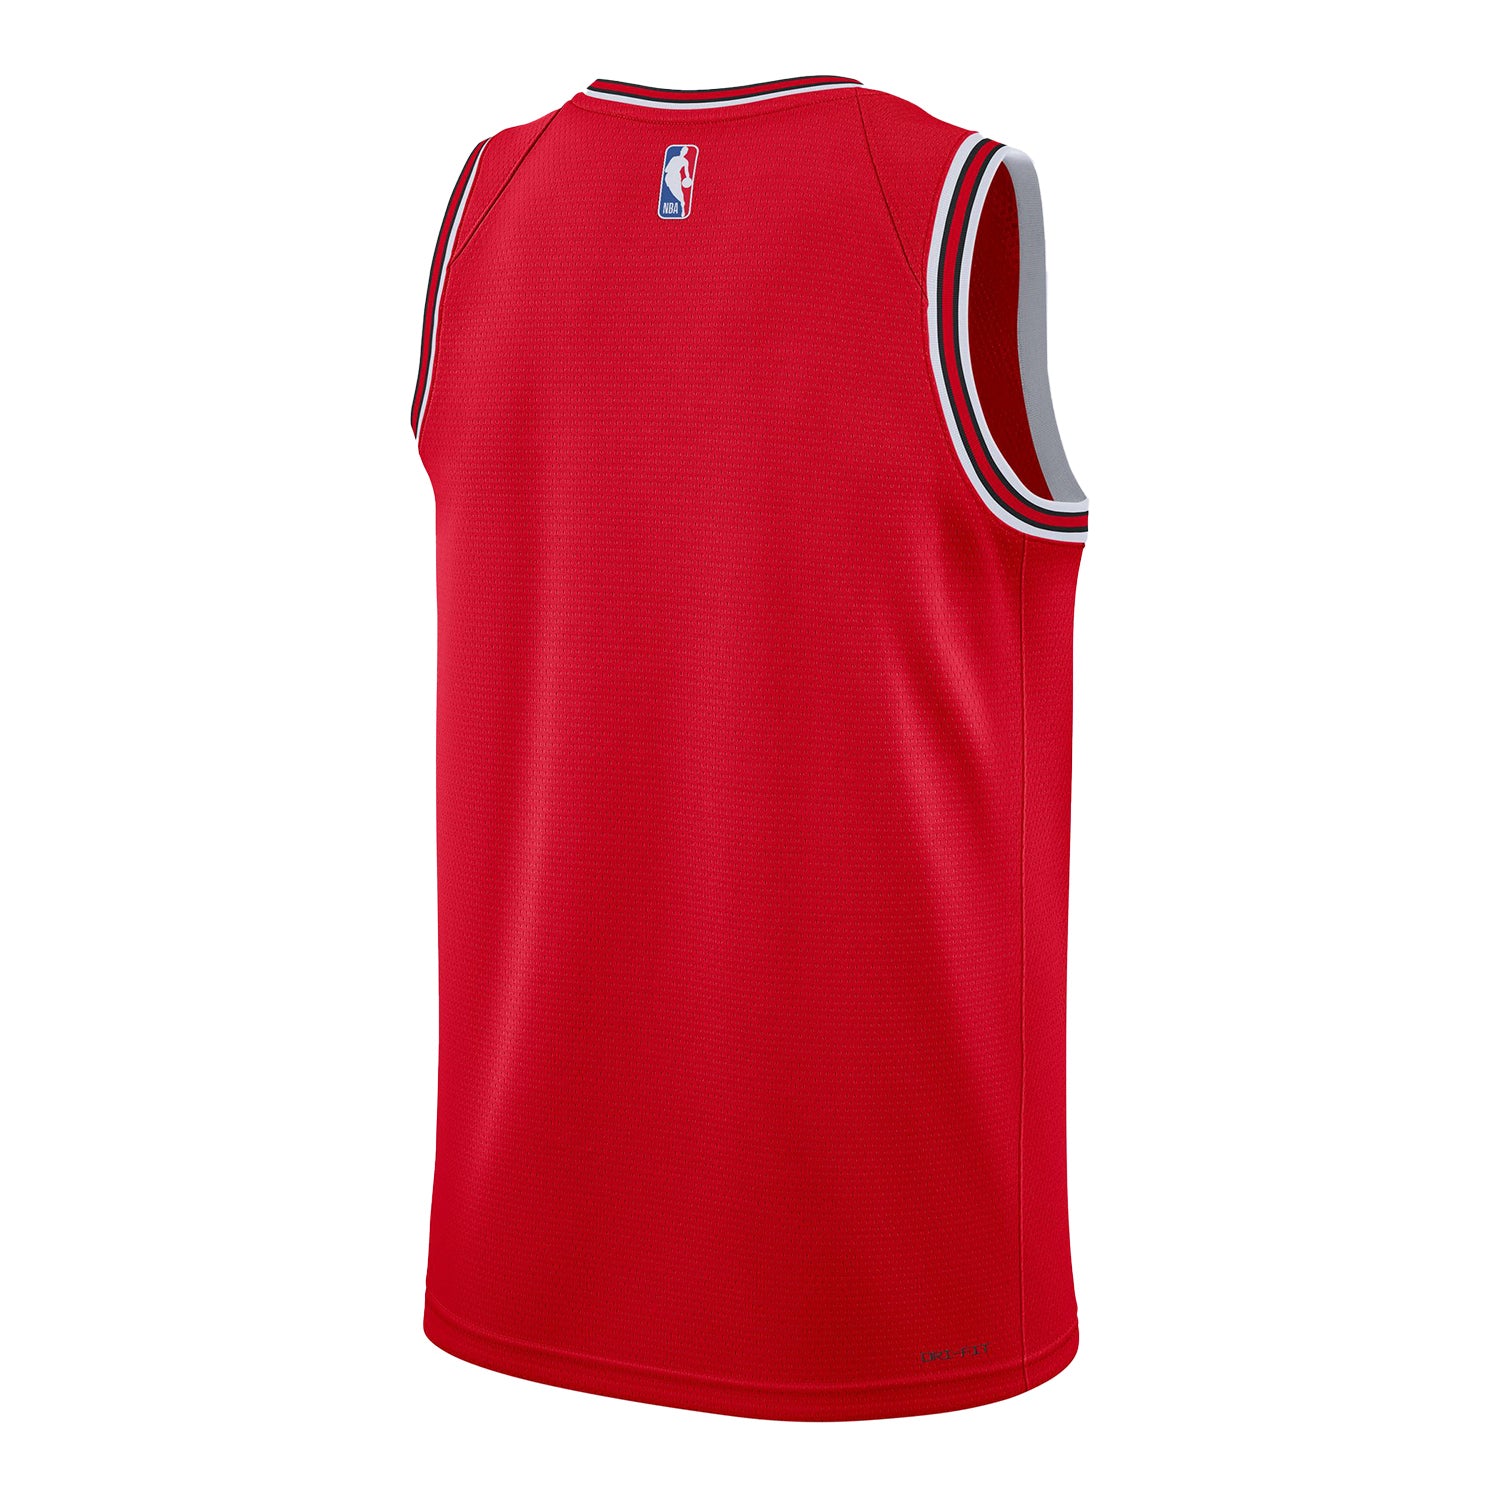 Chicago Bulls City Edition Men's Nike Dri-FIT NBA Swingman Shorts.